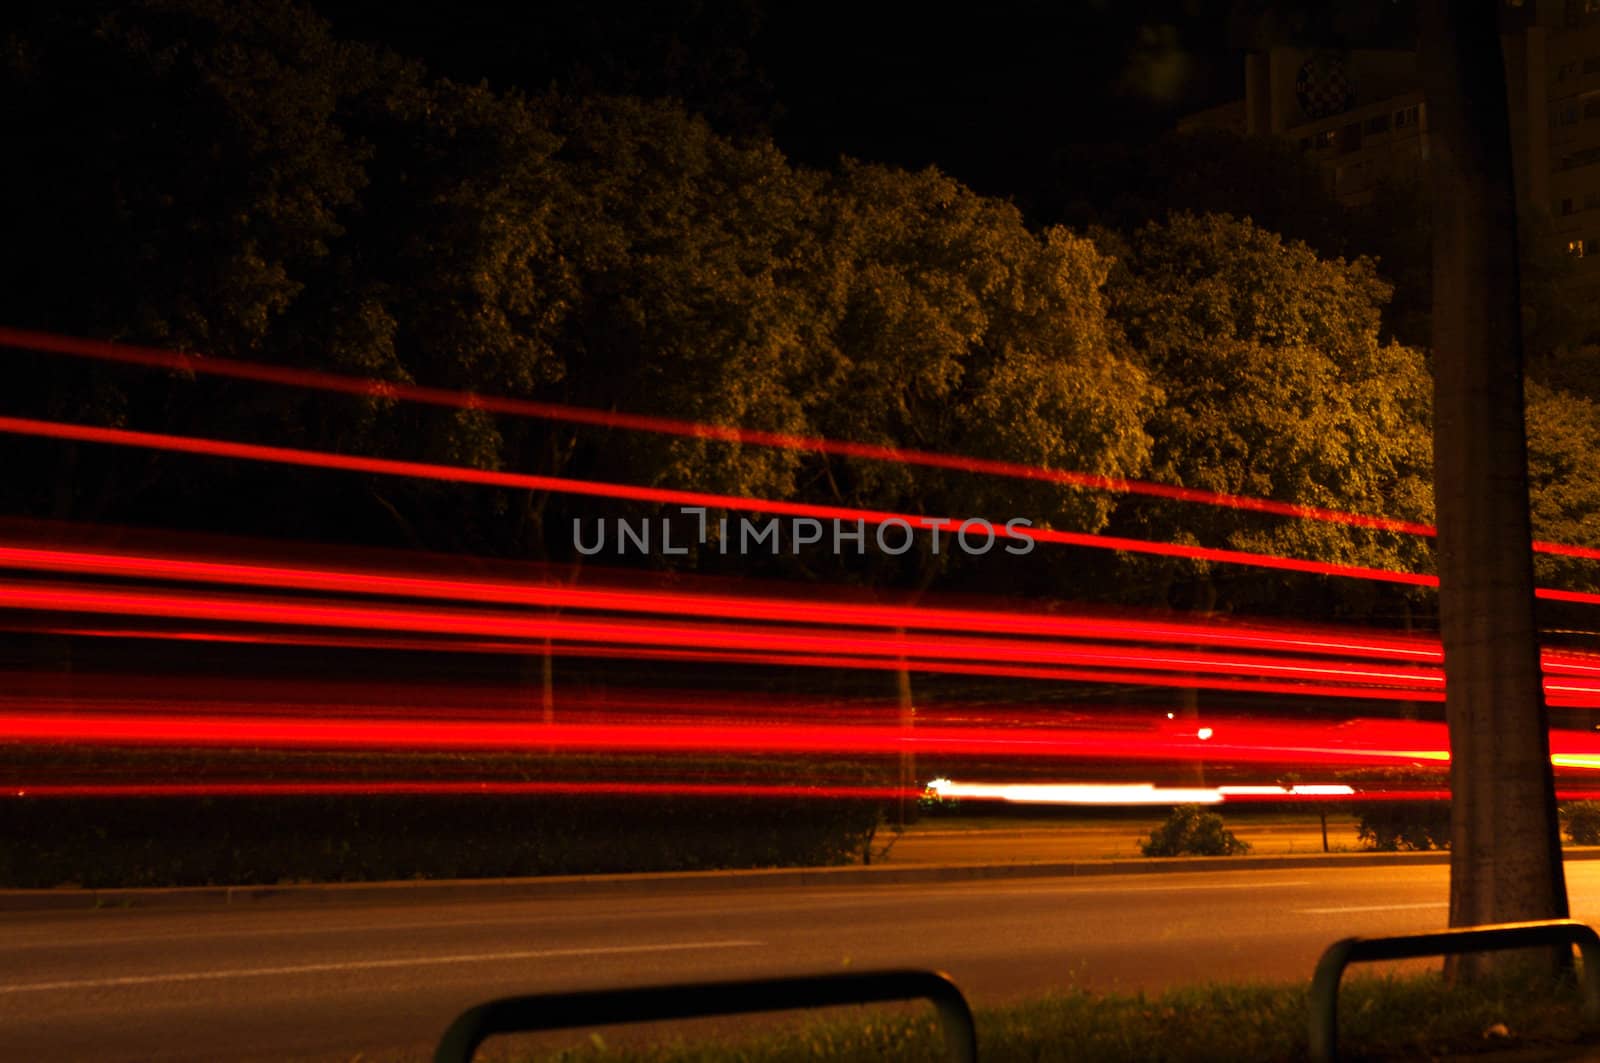 a night shot of vehicles on city street